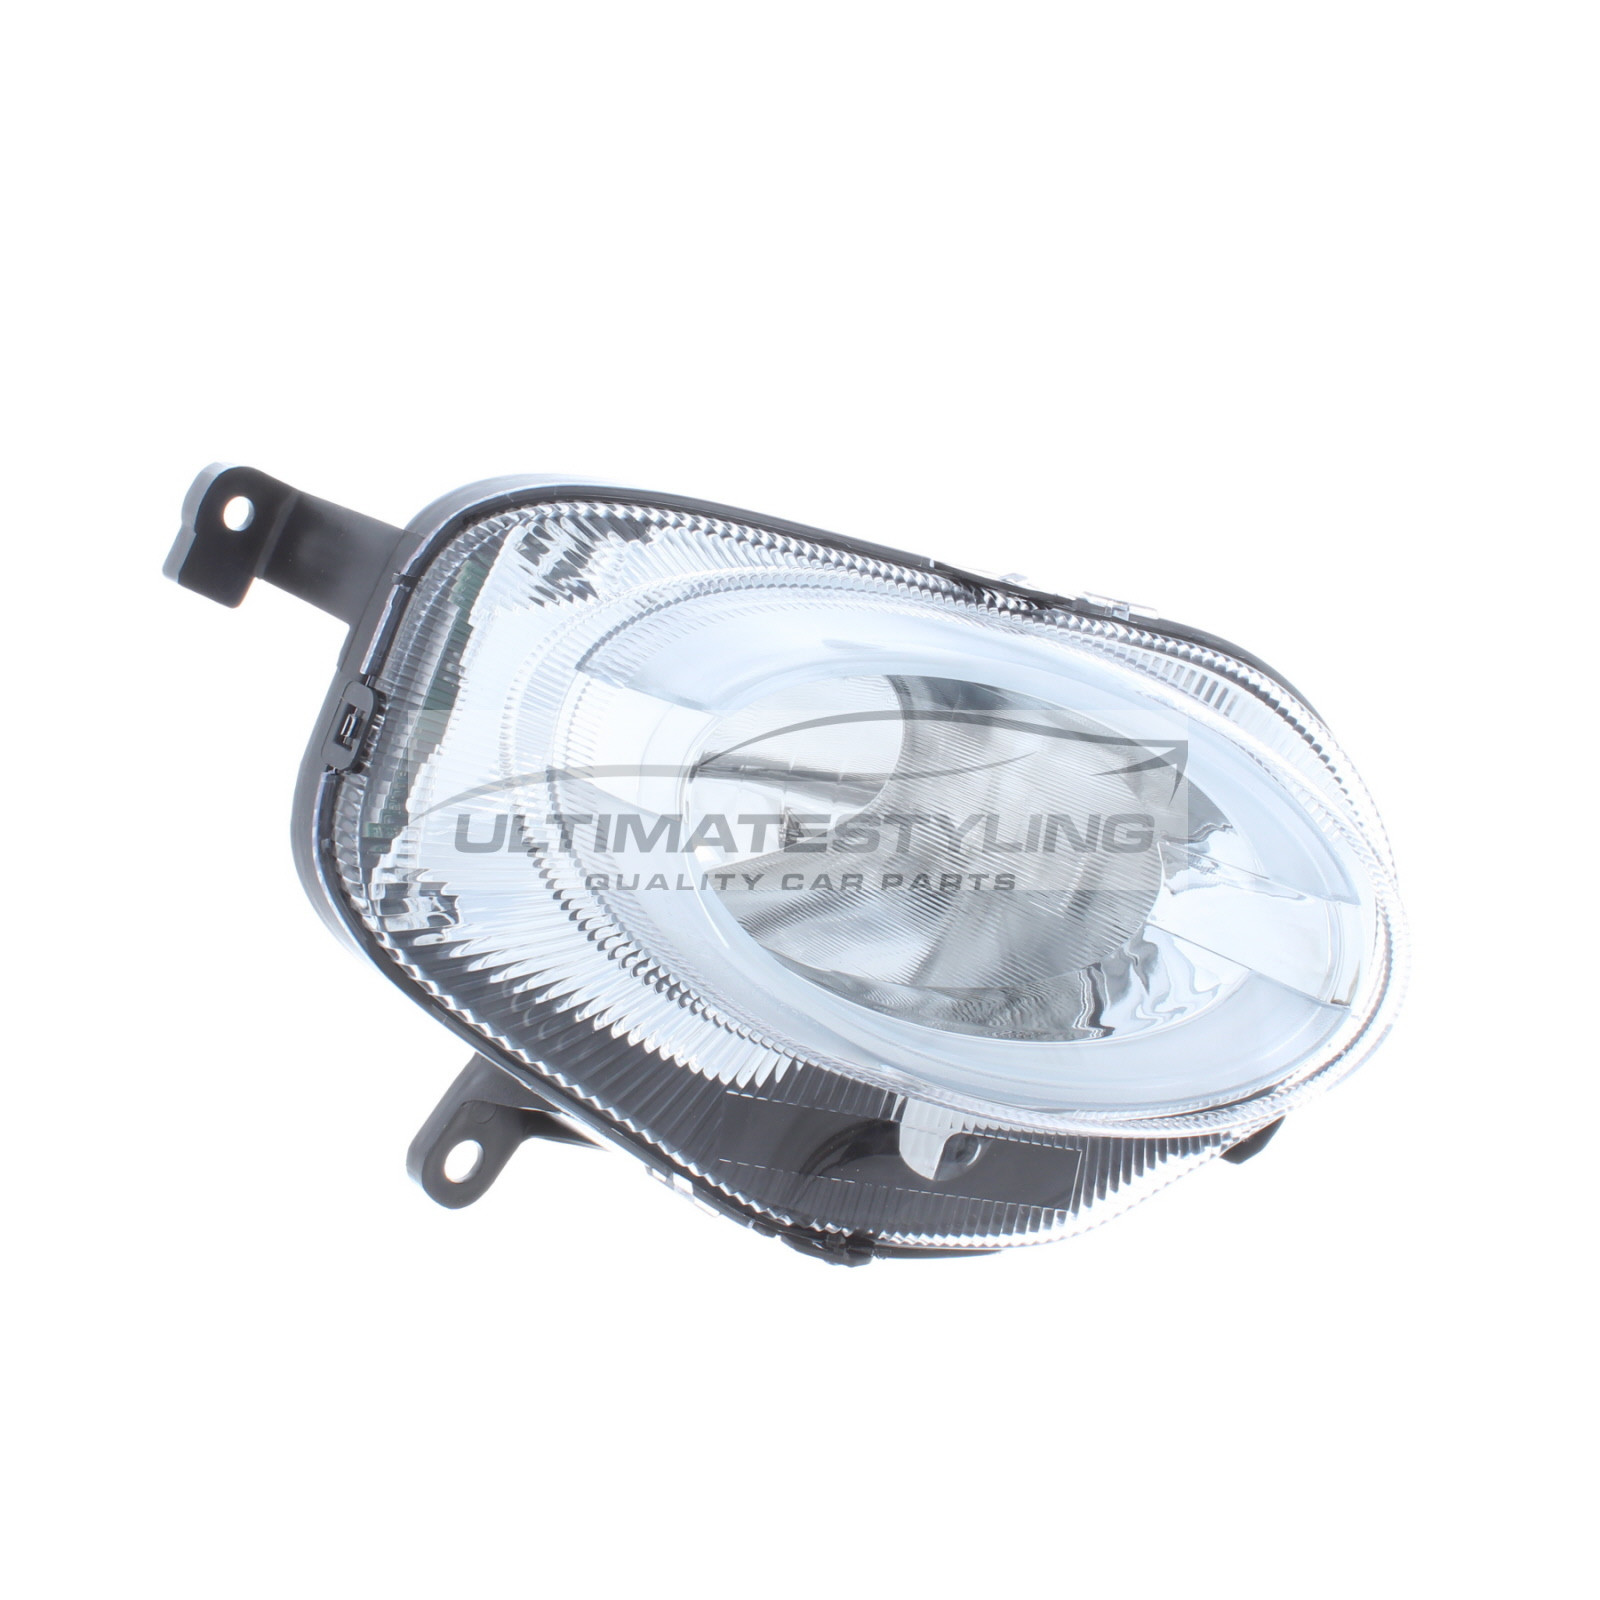 Headlight / Headlamp for Abarth 595